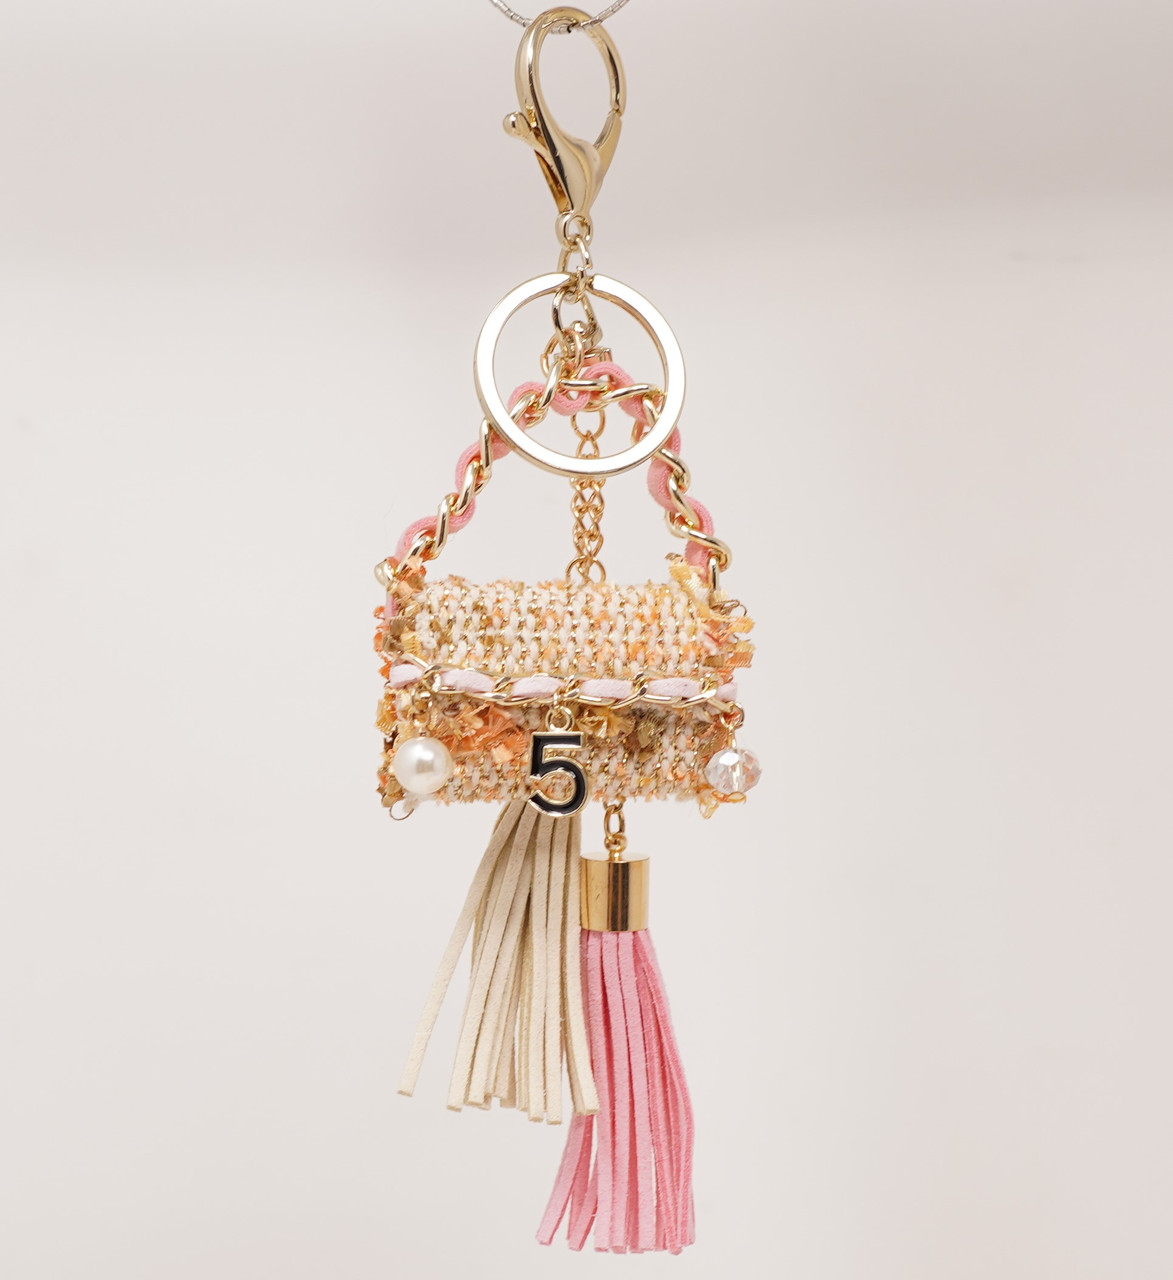 Tweed Handbag Shape 5 Tower Rose Key Chain Metal Rhinestone Bag Charms  Pendant Women Vintage Fashion Brand Jewelry - AliExpress